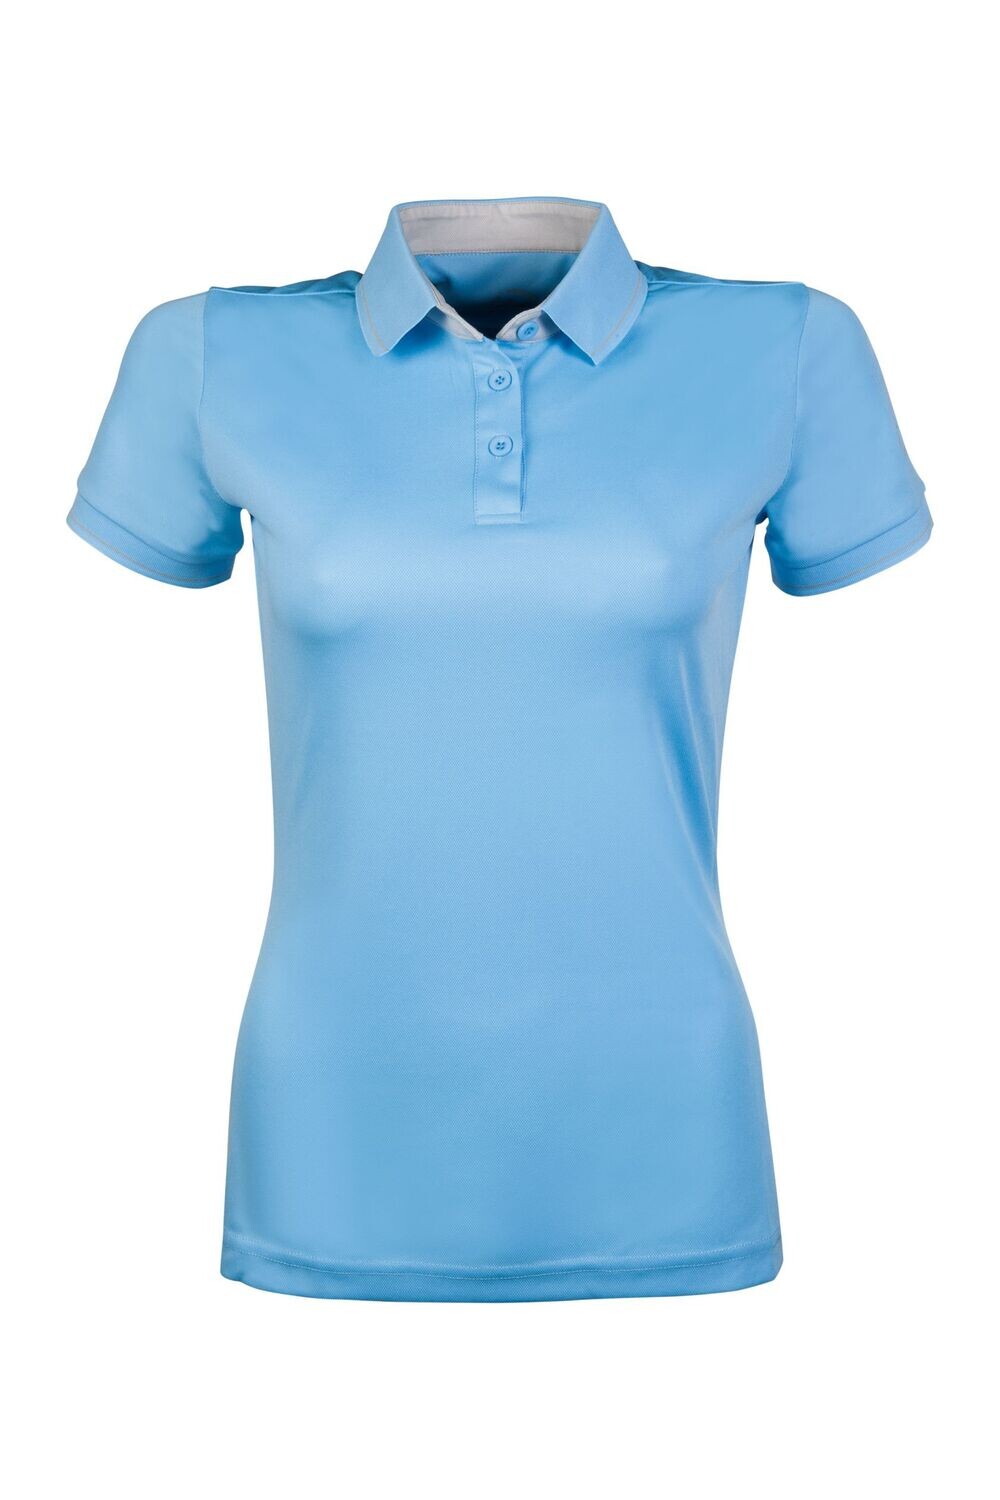 HKM Classico Polo Shirt (Light Blue, Small)